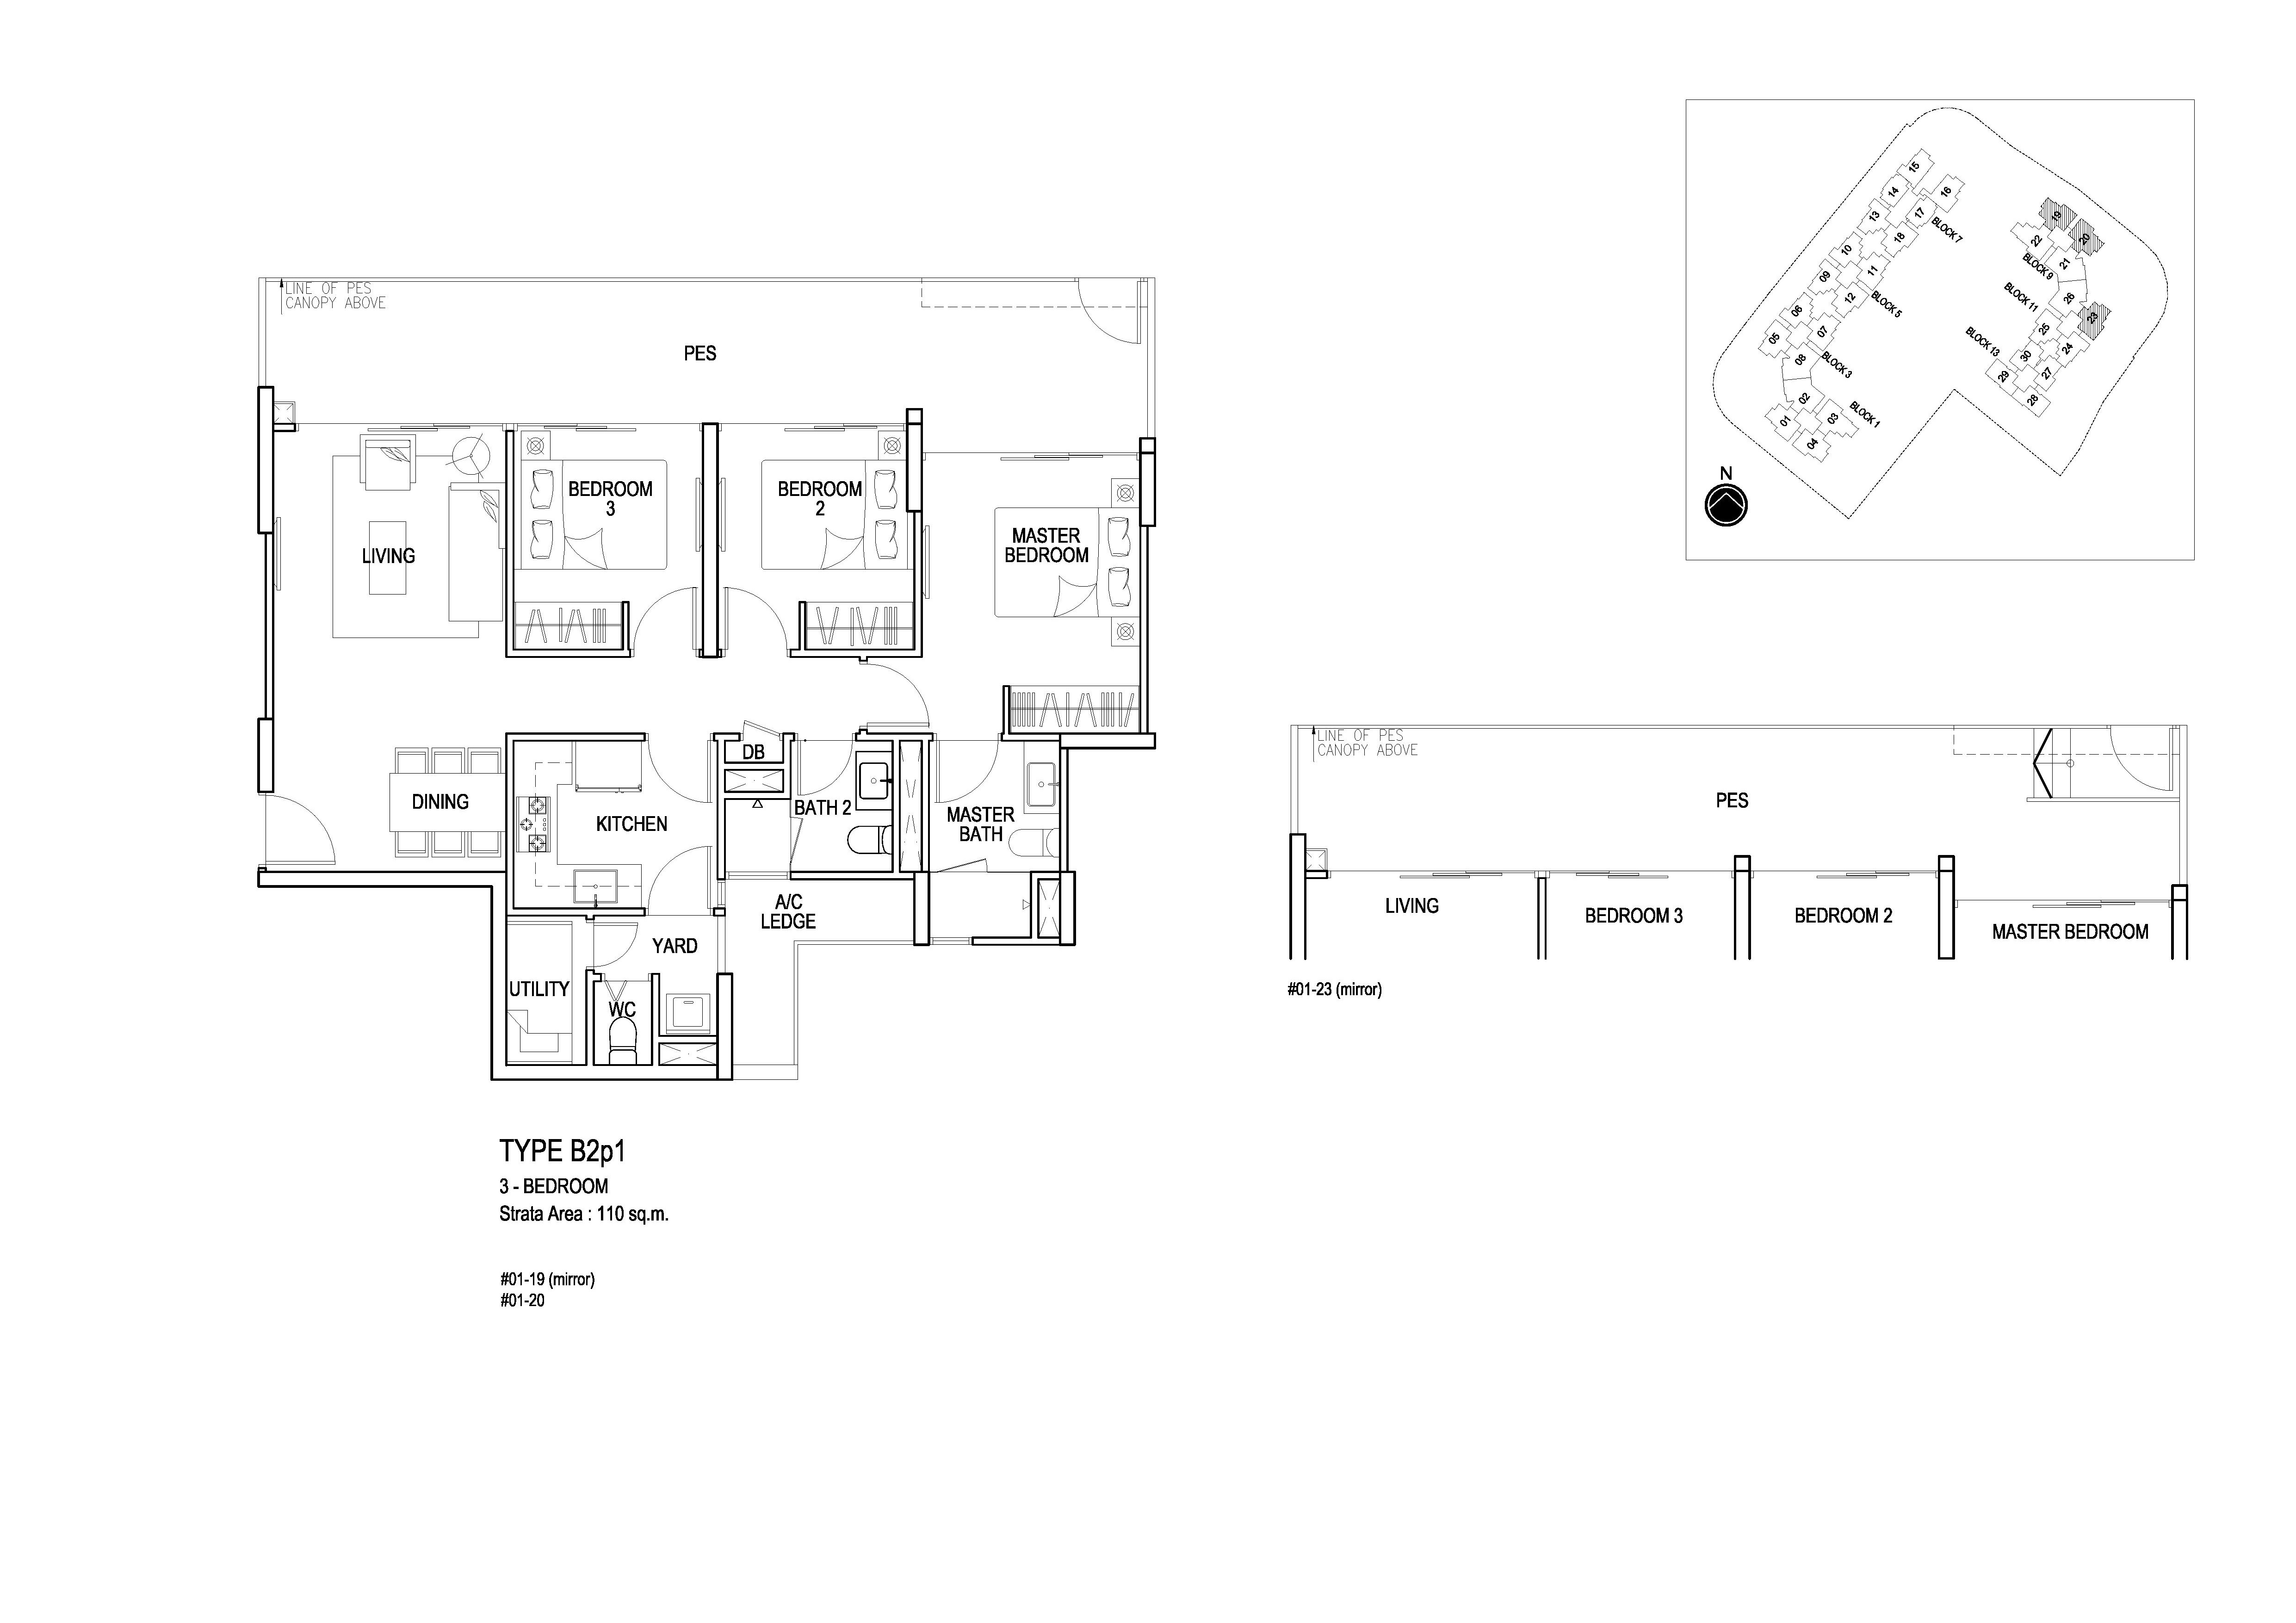 Flo Residence 3 Bedroom PES Floor Plans Type B2p1